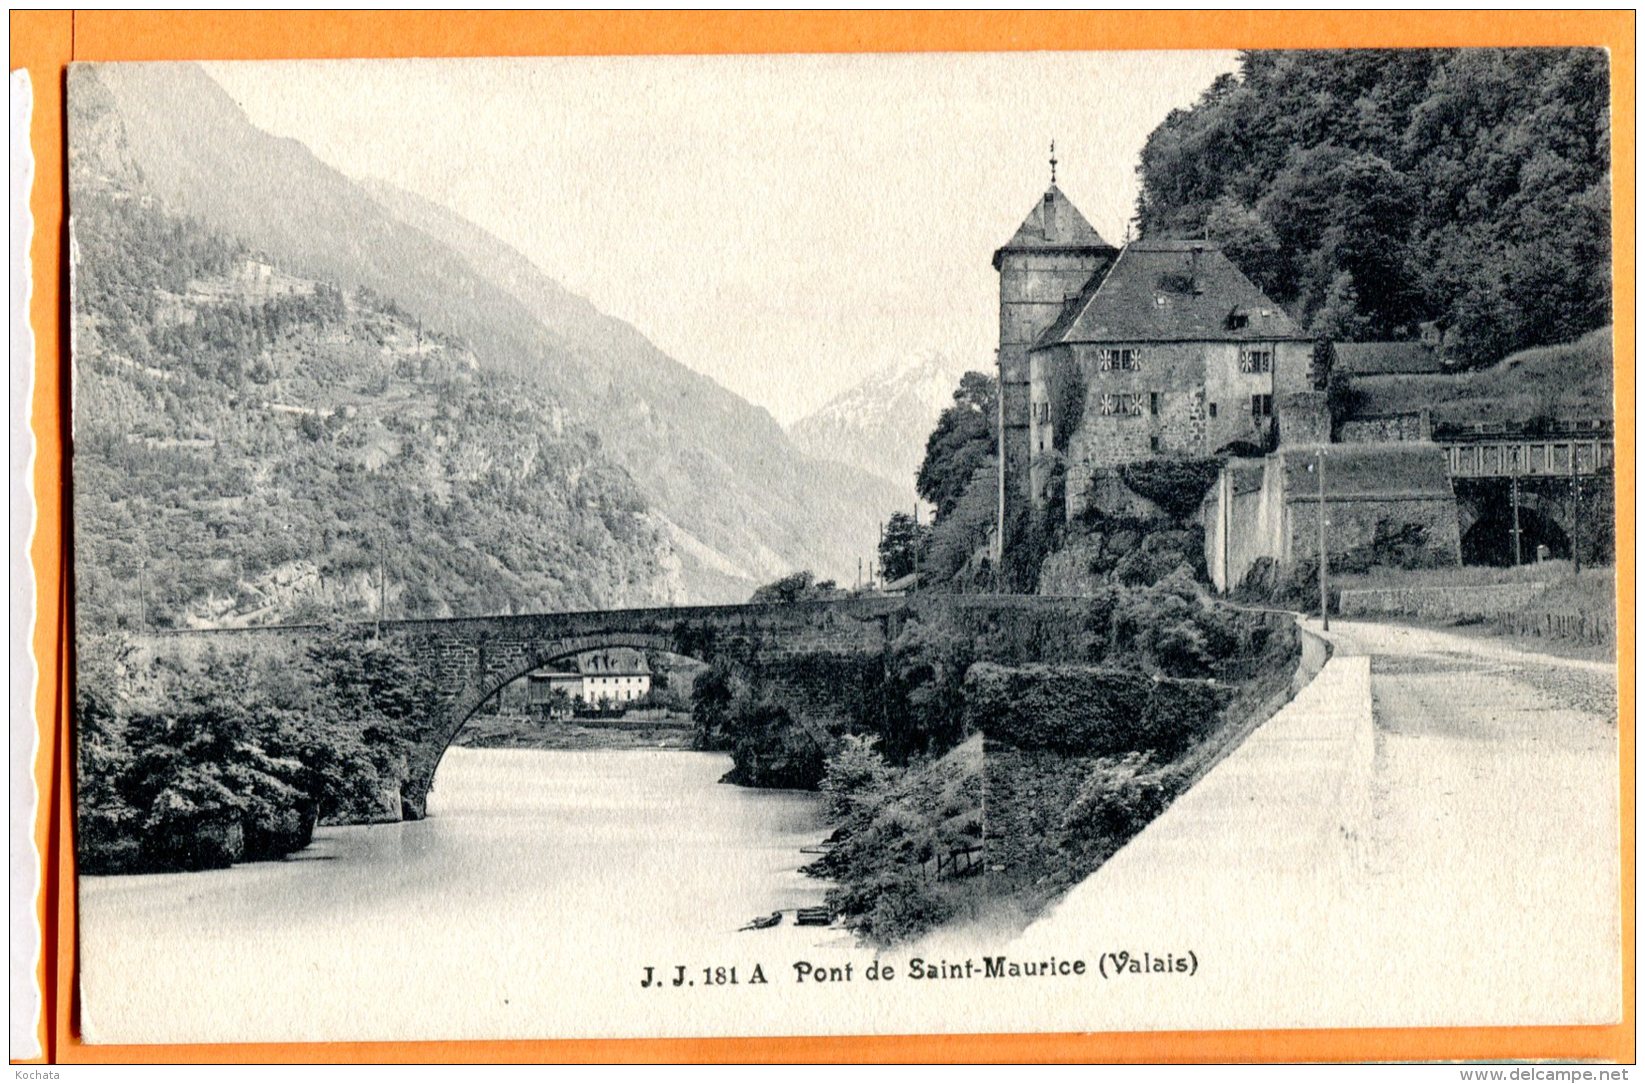 ALB487, Pont De Saint-Maurice, J. J. 181 A, Non Circulée - Saint-Maurice